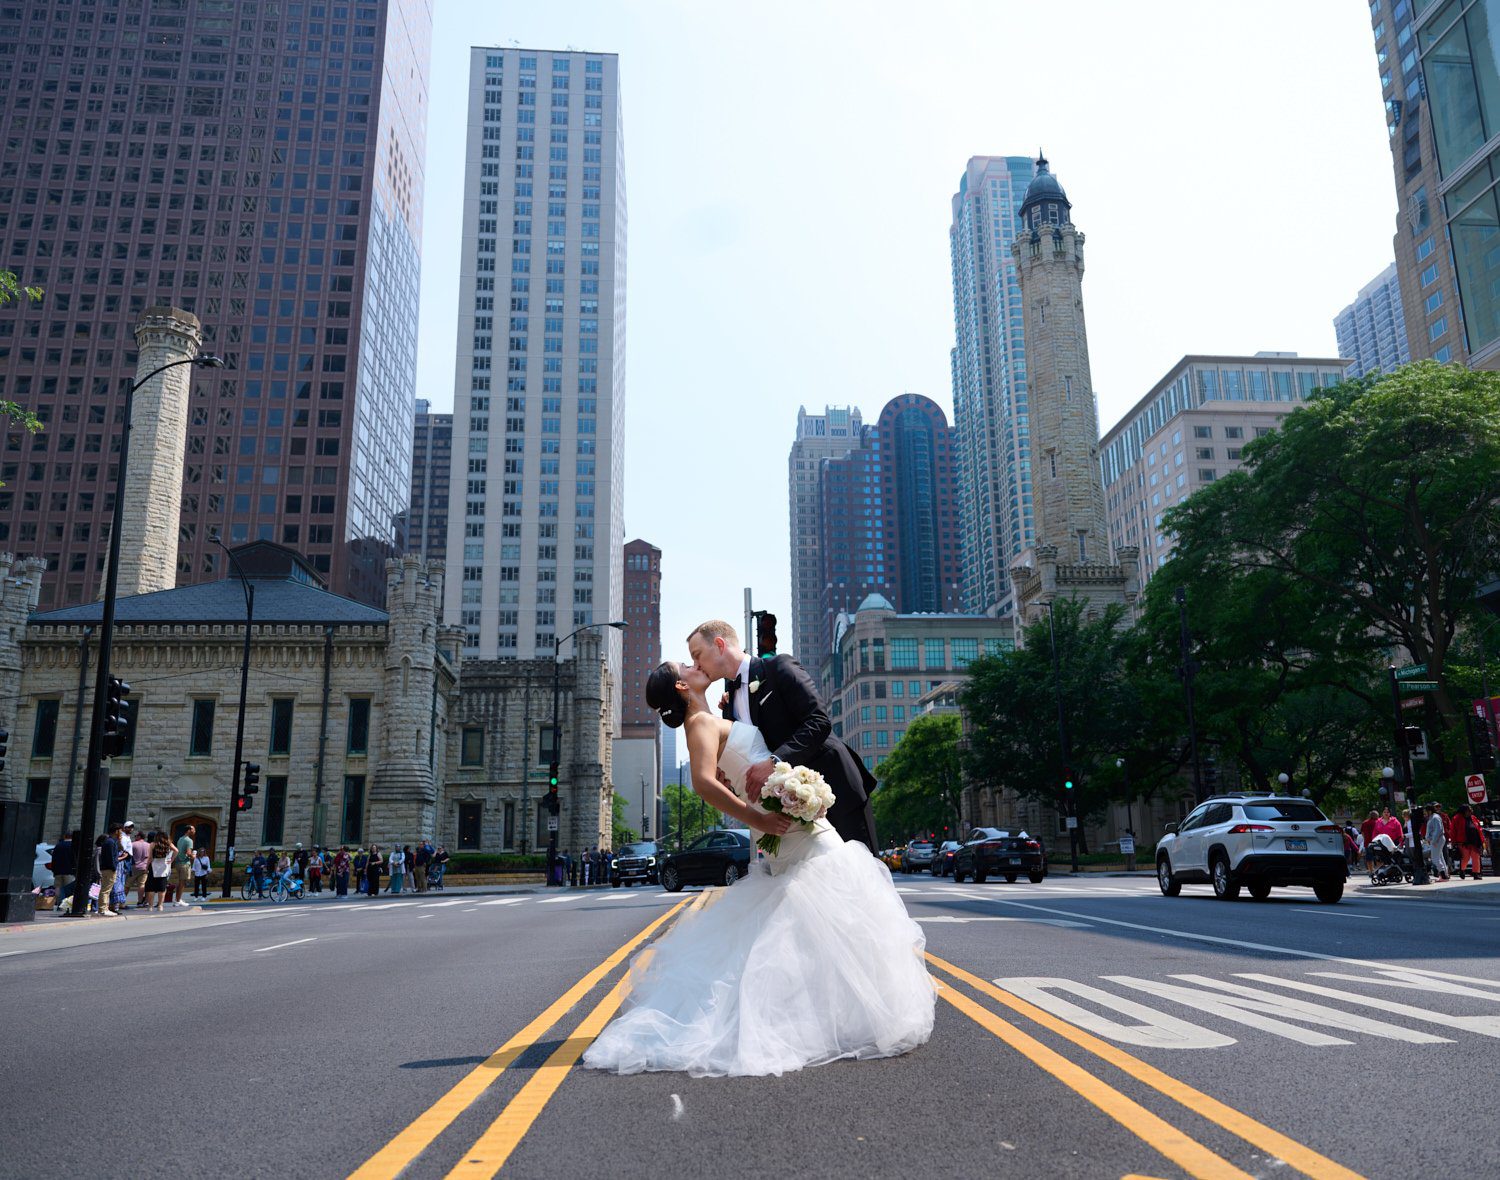 Michigan avenue wedding photography bride and groom 